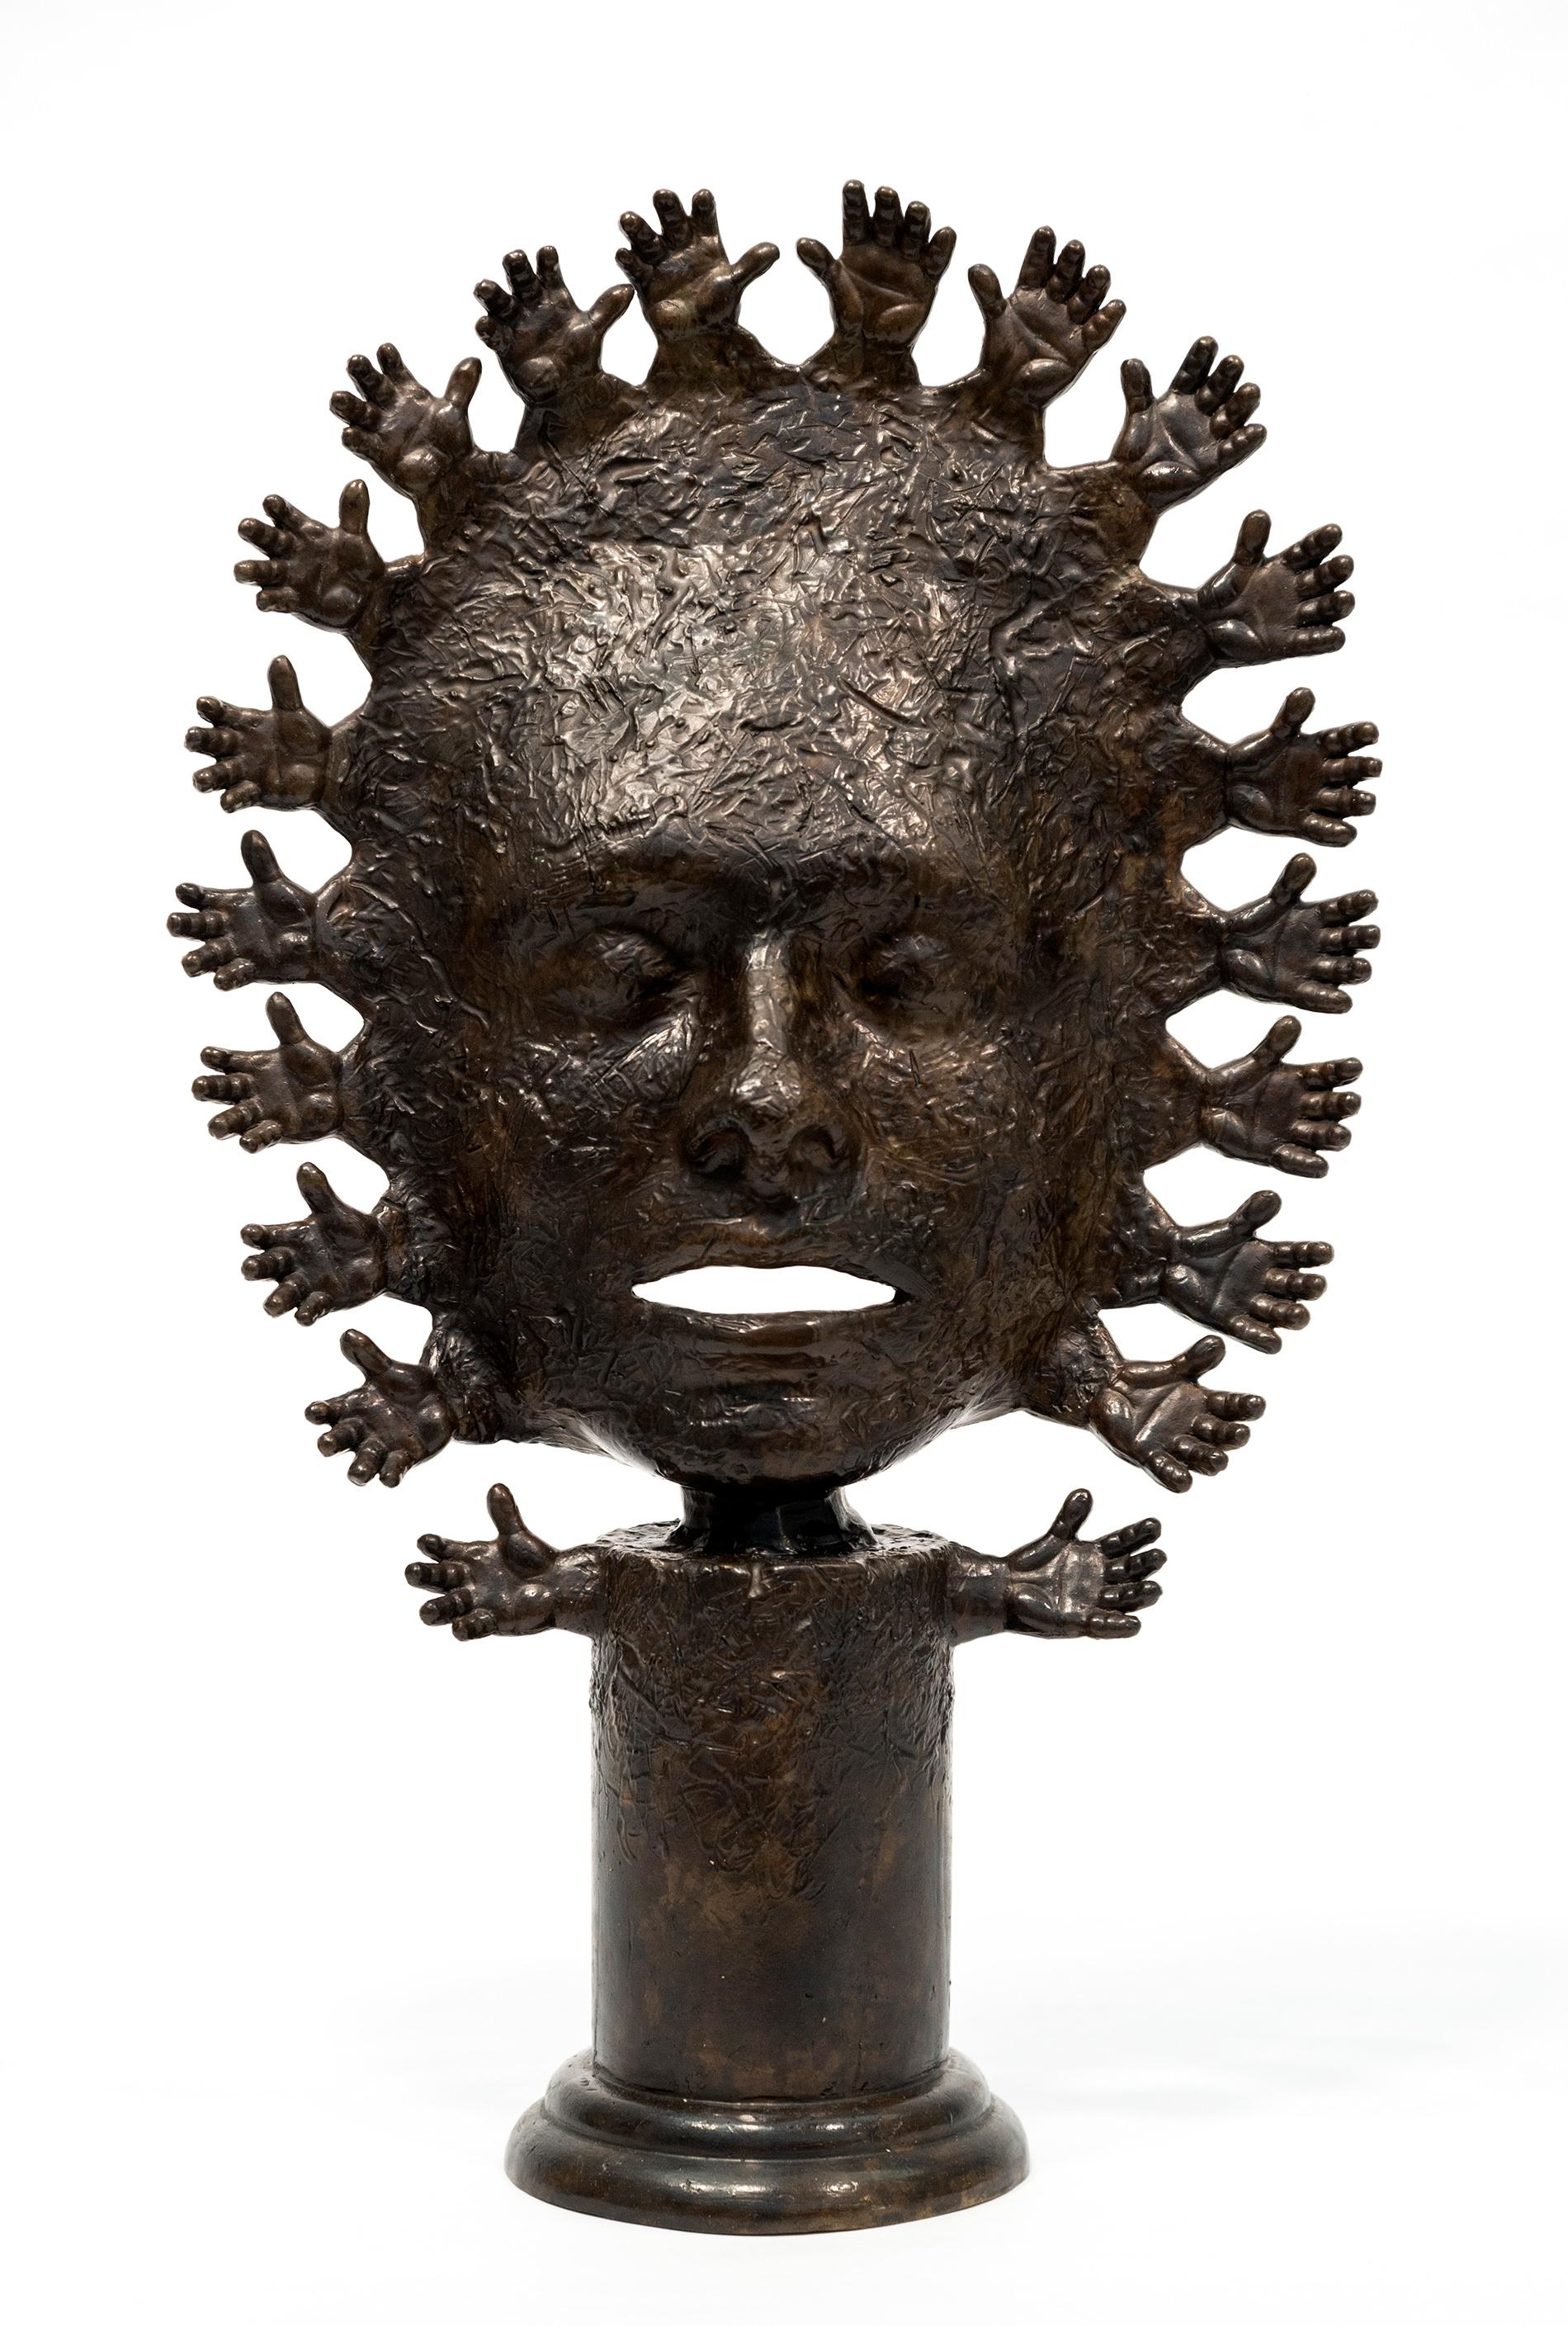 Benediction - figurative, face, hands, mask, tribal, cast bronze sculpture - Sculpture by Dale Dunning